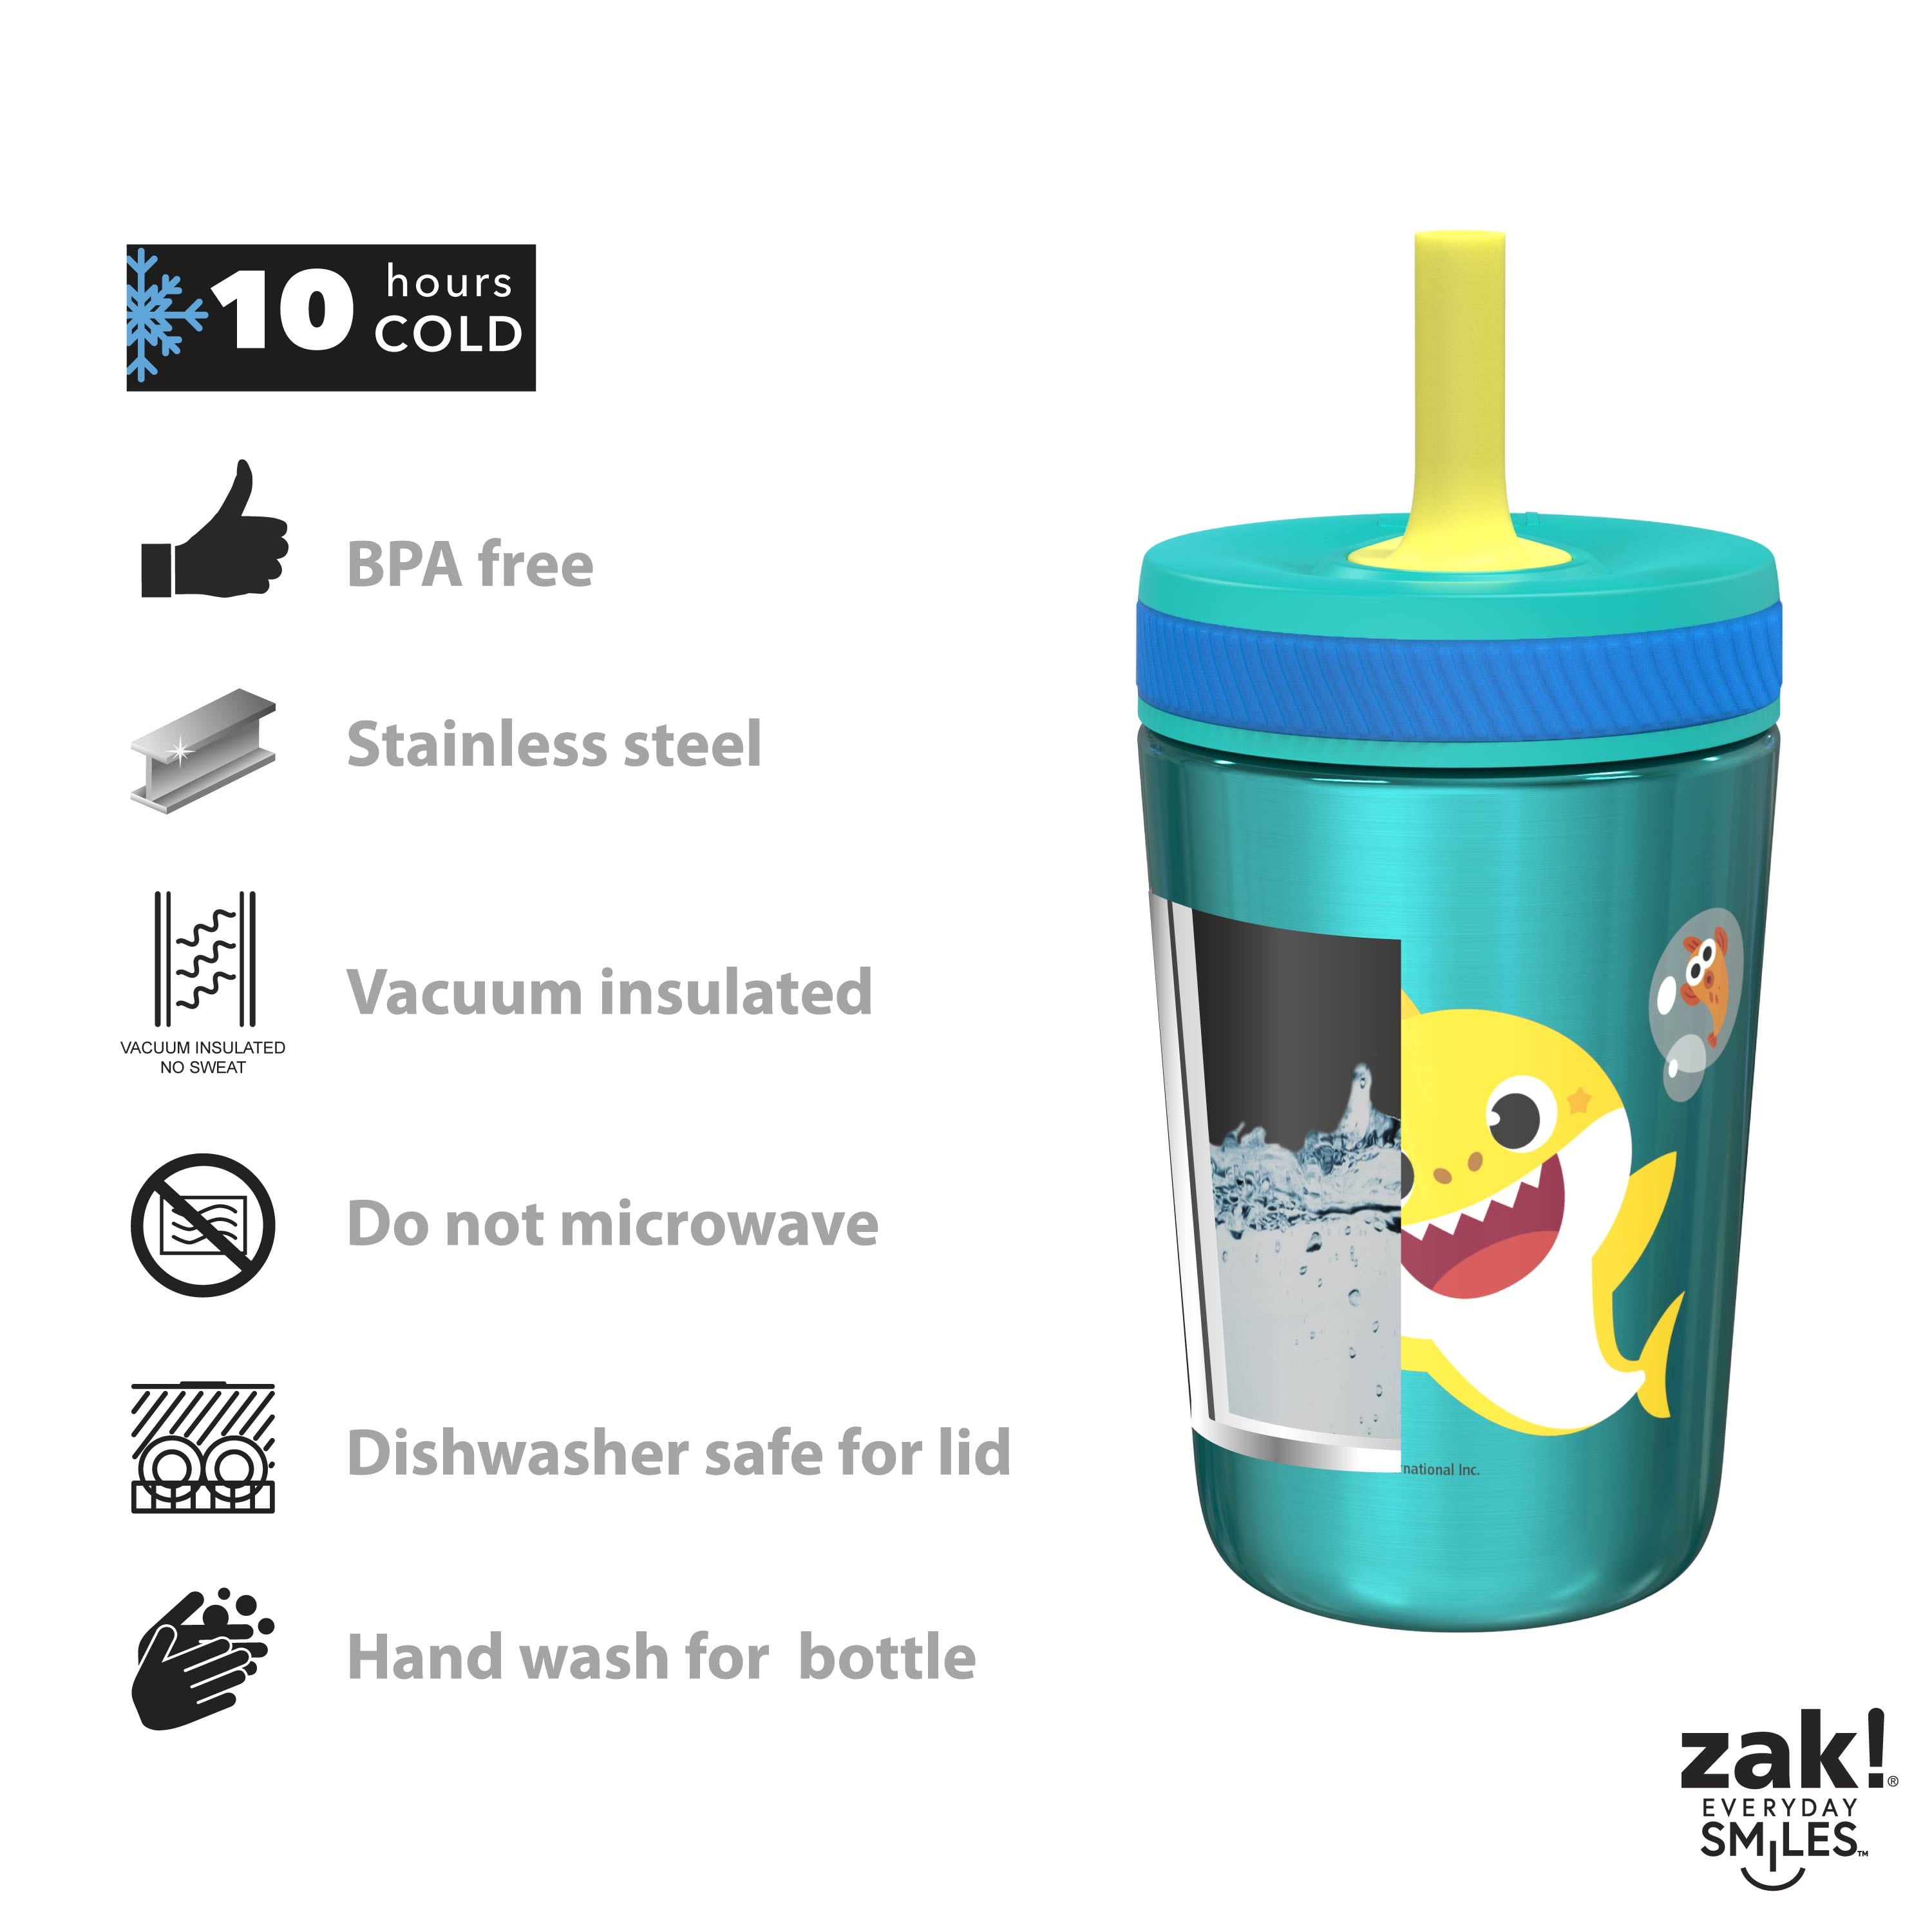 Zak Designs 15oz Baby Shark Kelso Tumbler Set-, by SAM